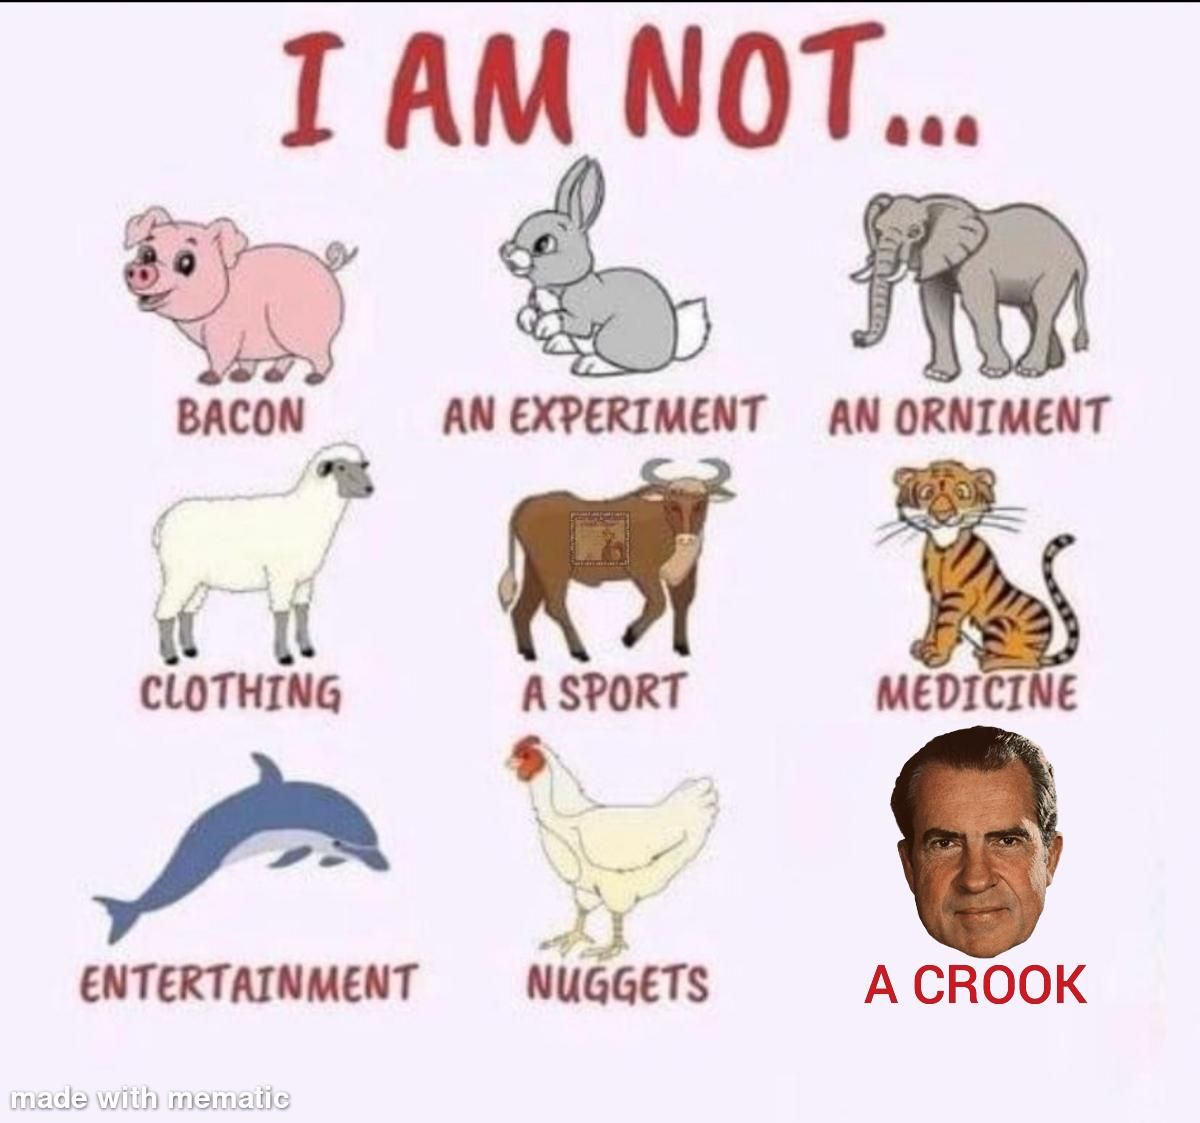 I am not a crook!